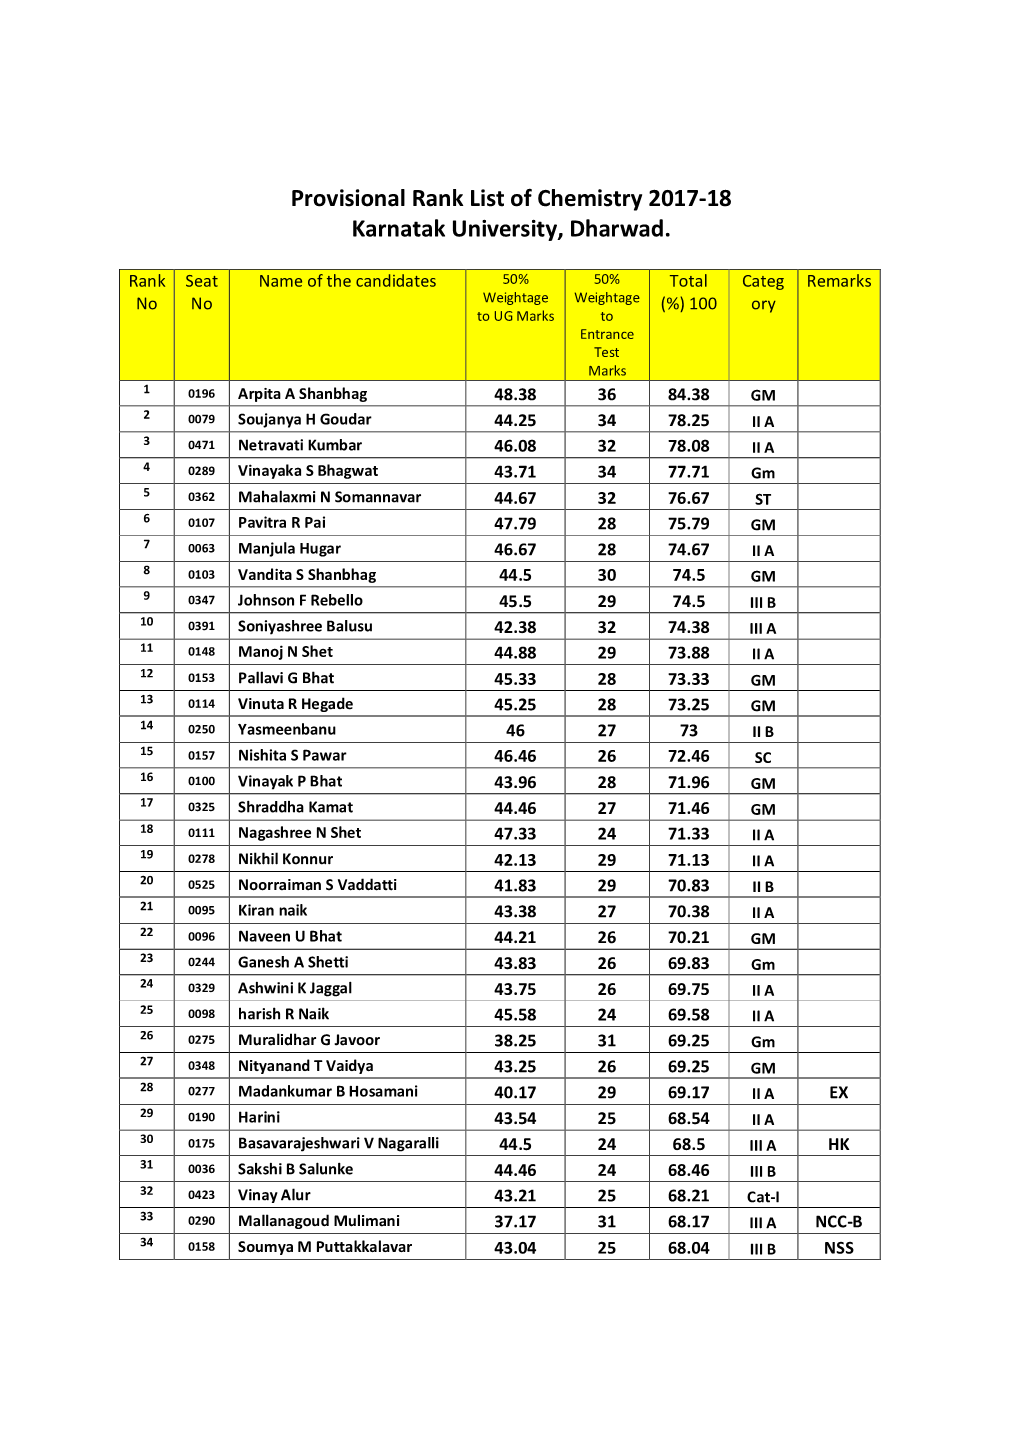 Provisional Rank List of Chemistry 2017-18 Karnatak University, Dharwad